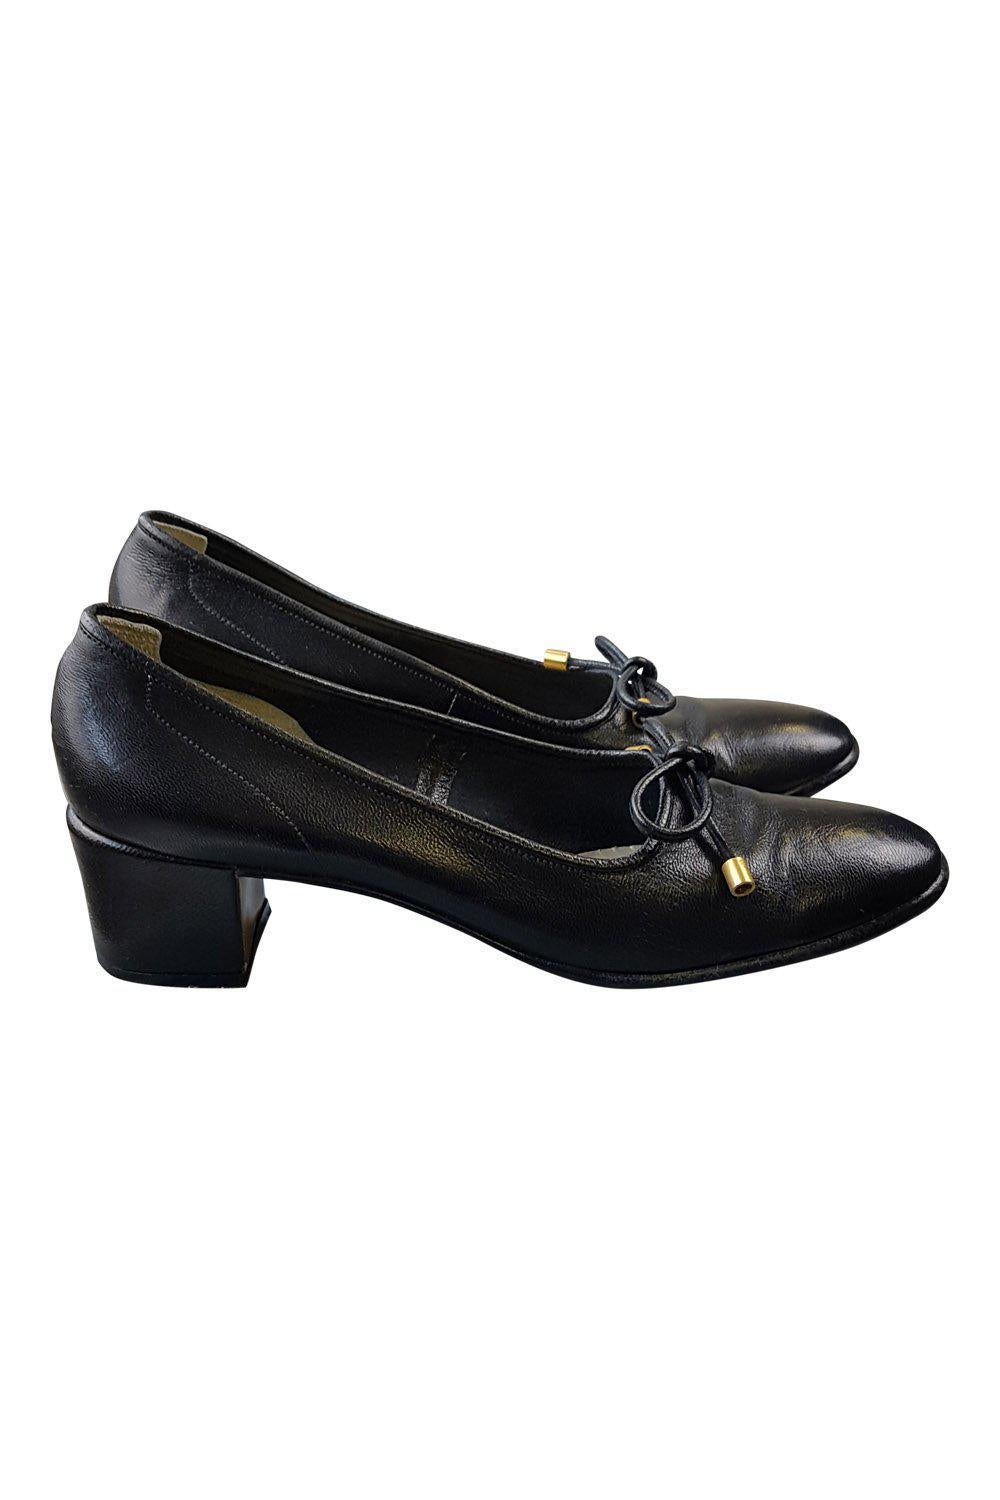 RANGONI Amalfi Black Mid Heel Court Shoes (8.5)-Rangoni-The Freperie